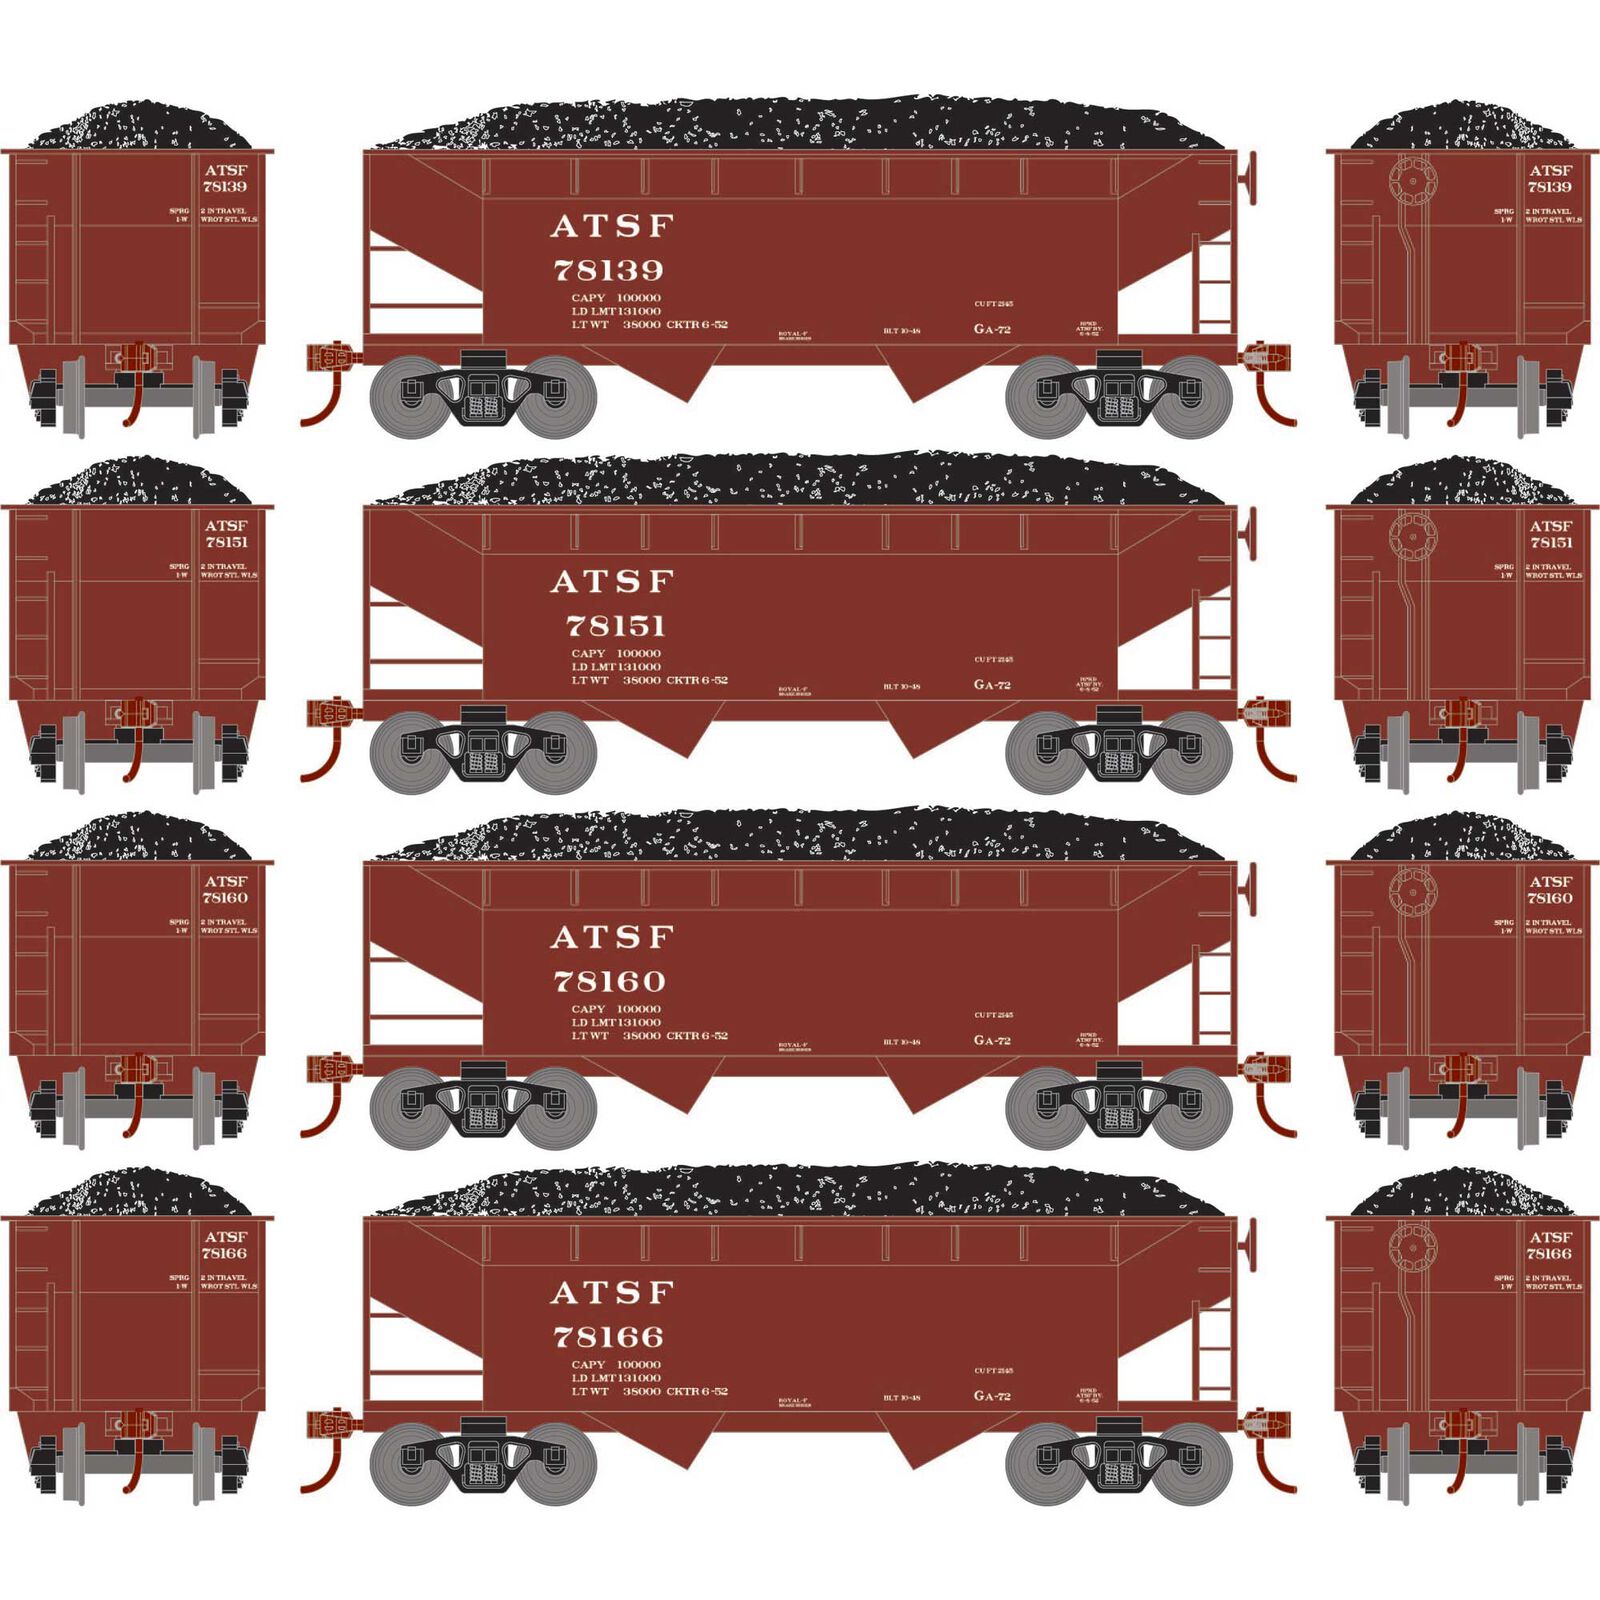 HO 34' 2-Bay Offset Hopper with Coal Load, ATSF #78139 / 78151 / 78160 / 78166 (4)